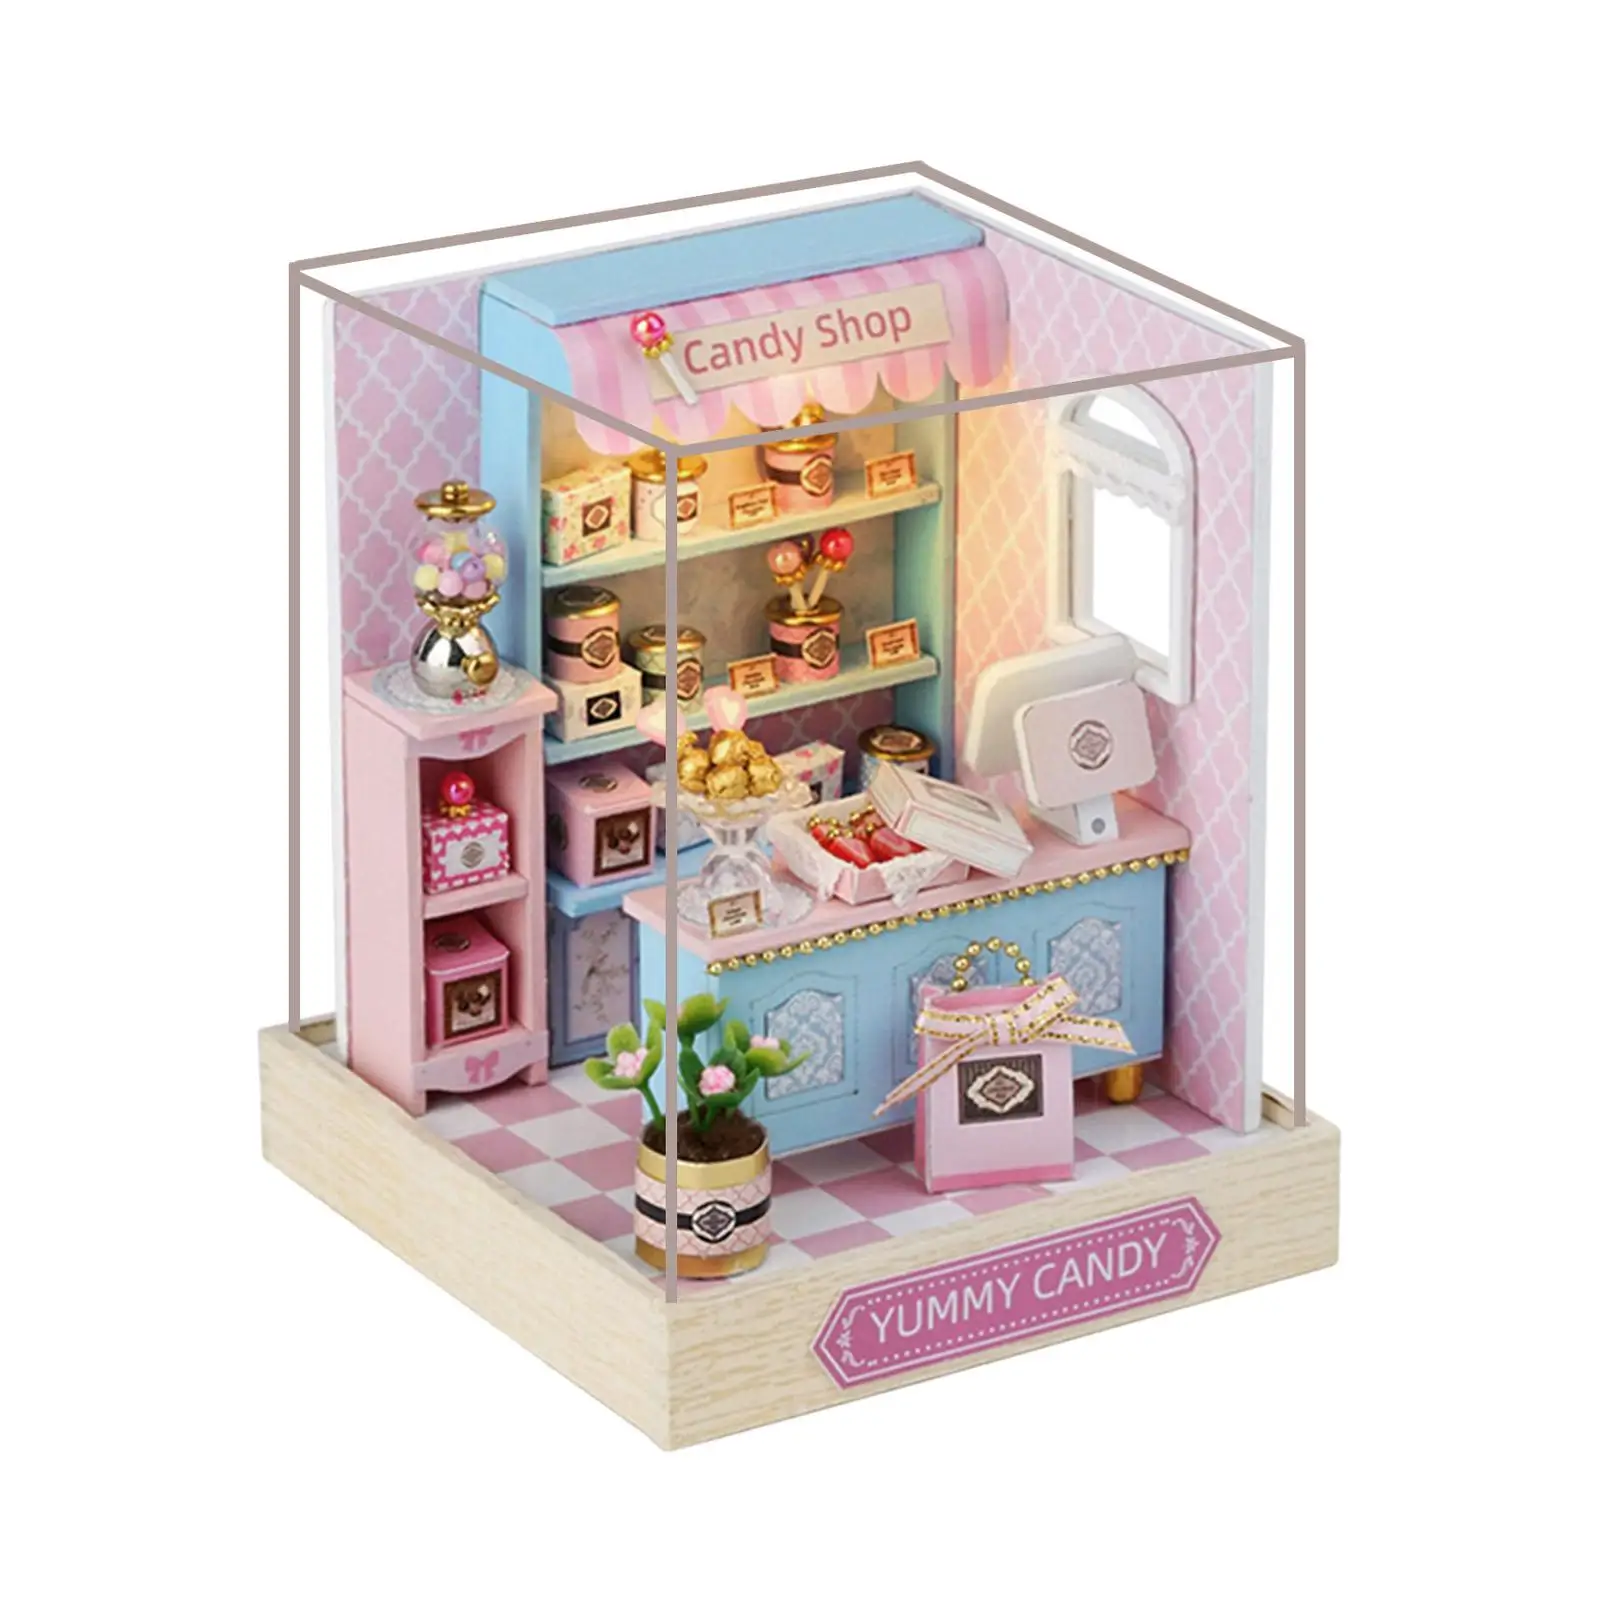 Miniature Dolls House Kits Decorations 3D Puzzles for Kids Adults Friends